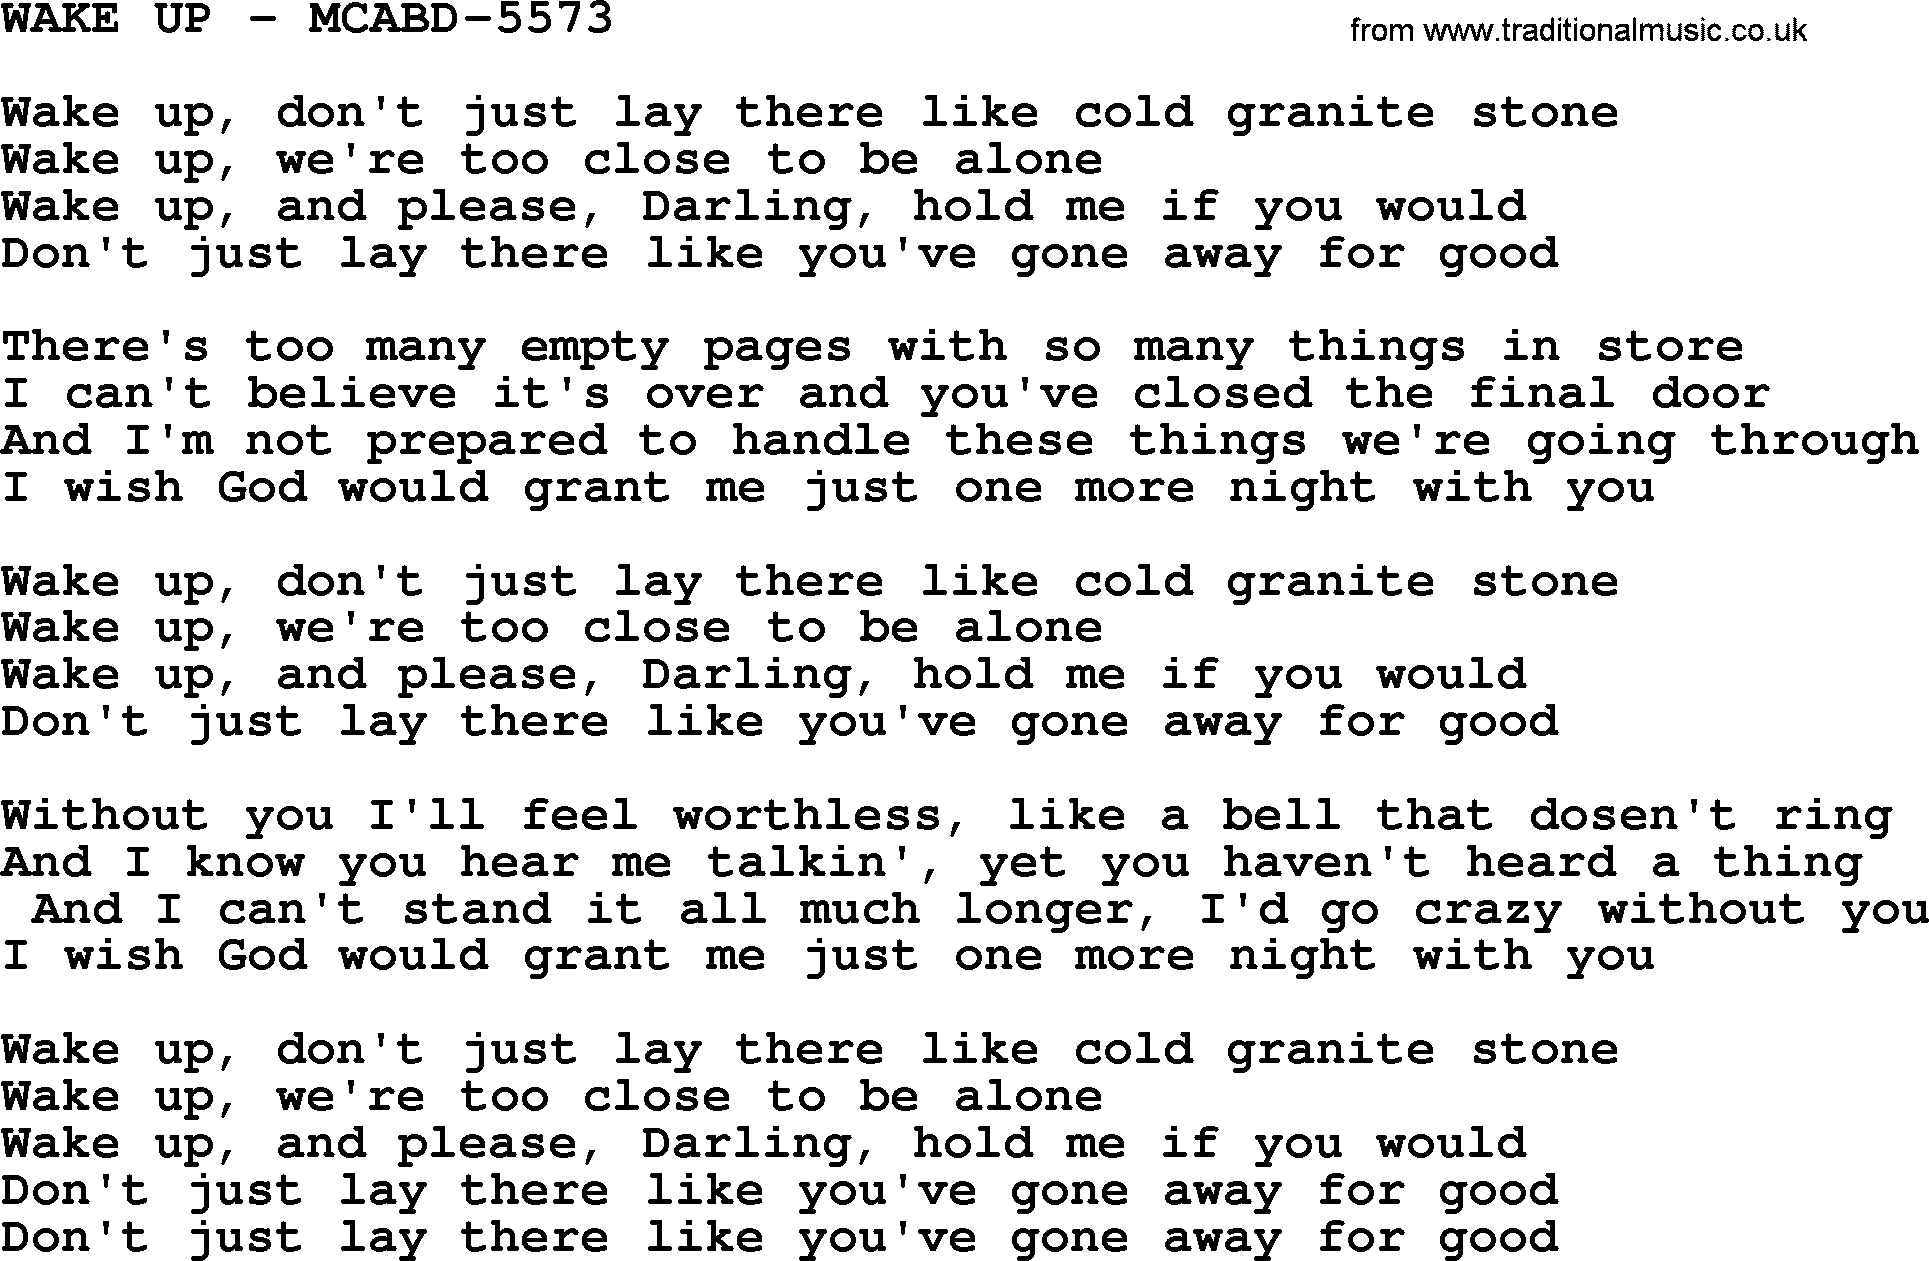 Merle Haggard song: Wake Up - Mcabd-5573, lyrics.